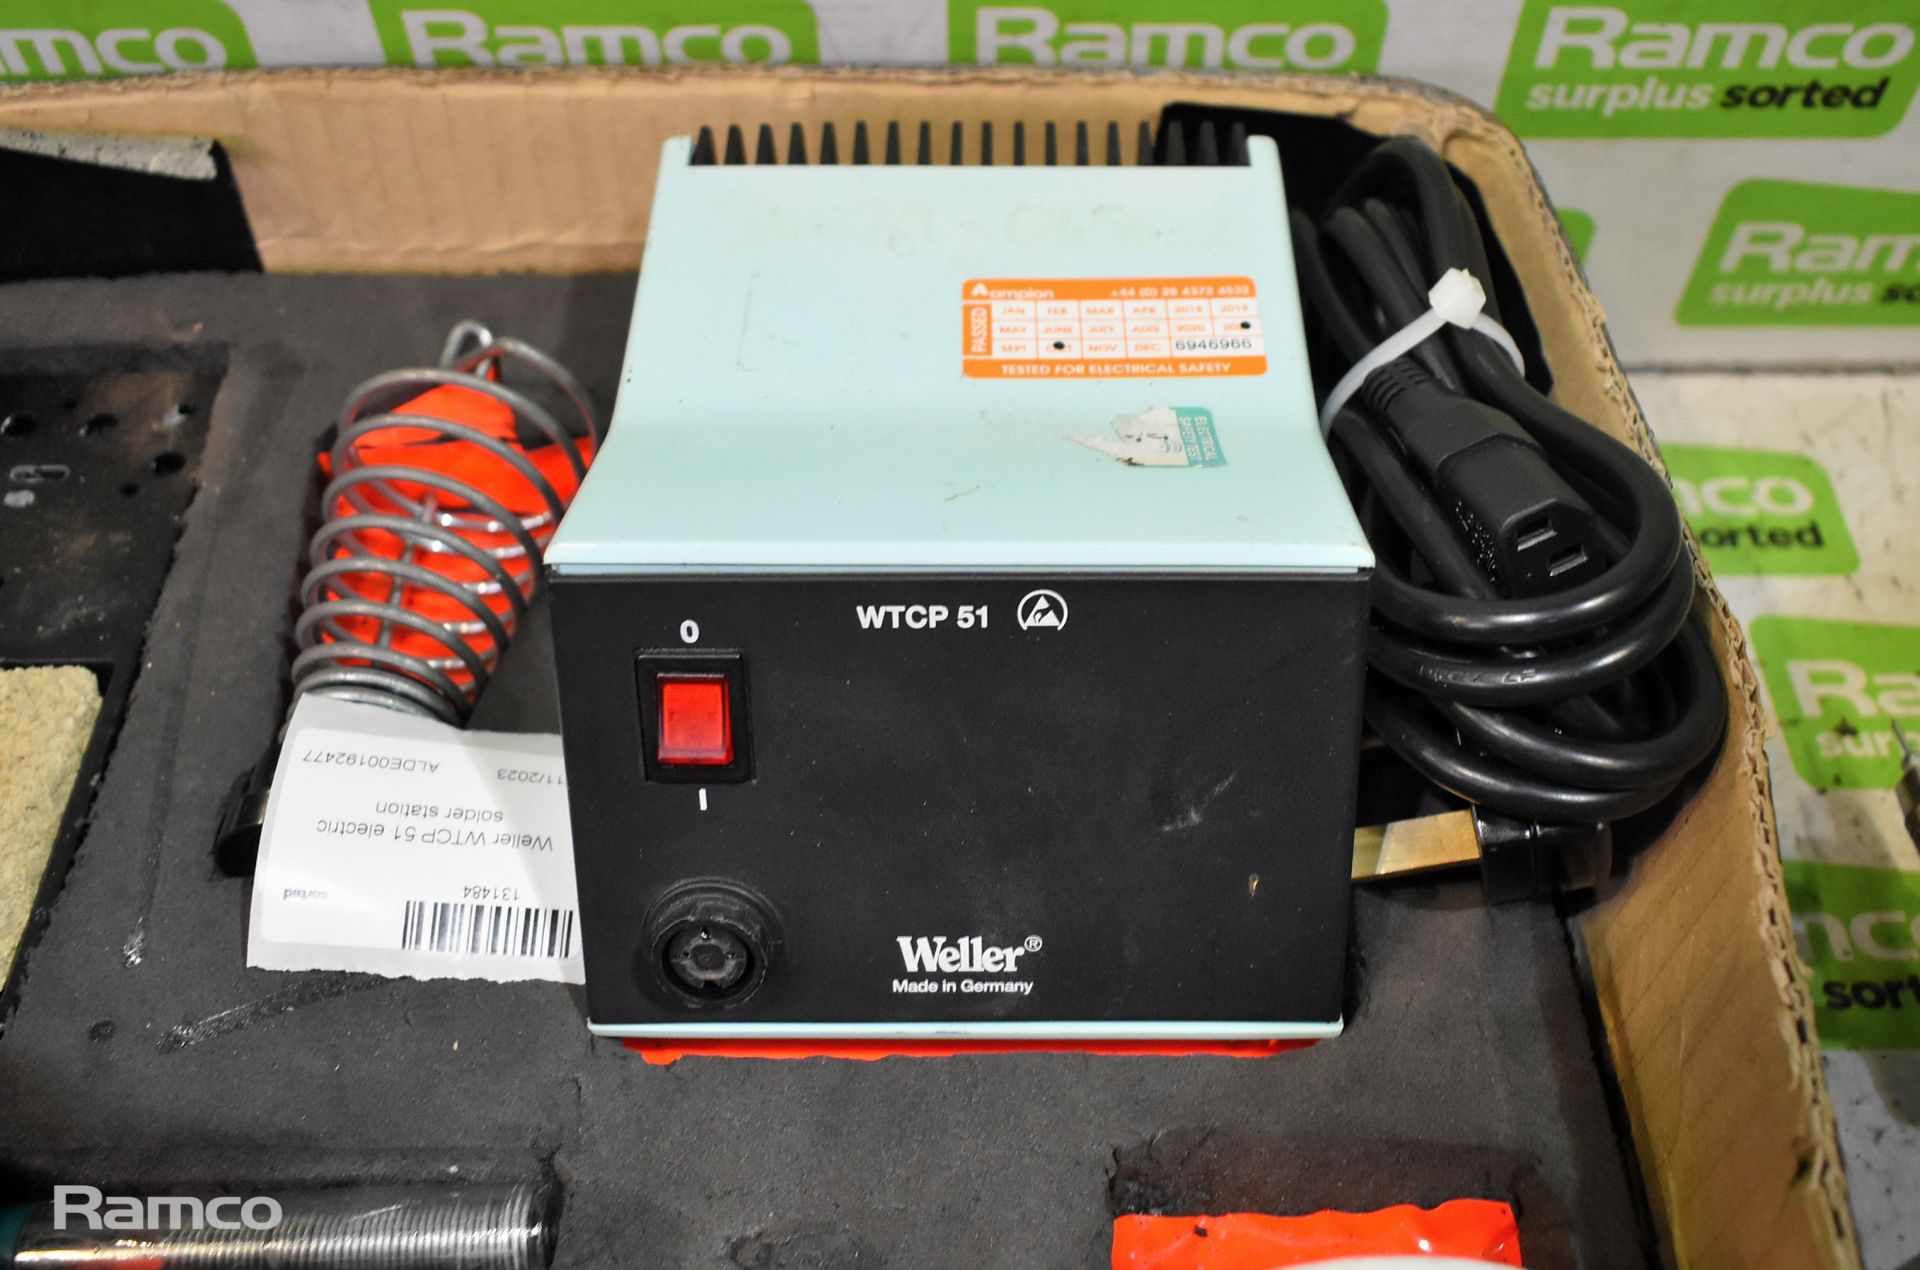 Burgess 460 electrical hand engraver - 240V, Weller WTCP 51 electric solder station - Image 2 of 8